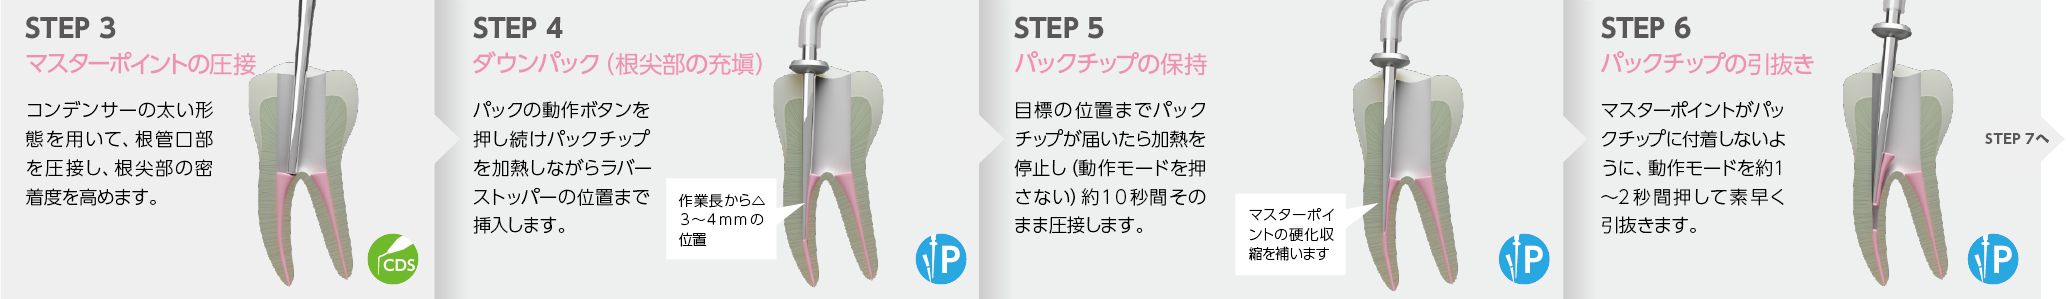 STEP3〜STEP6